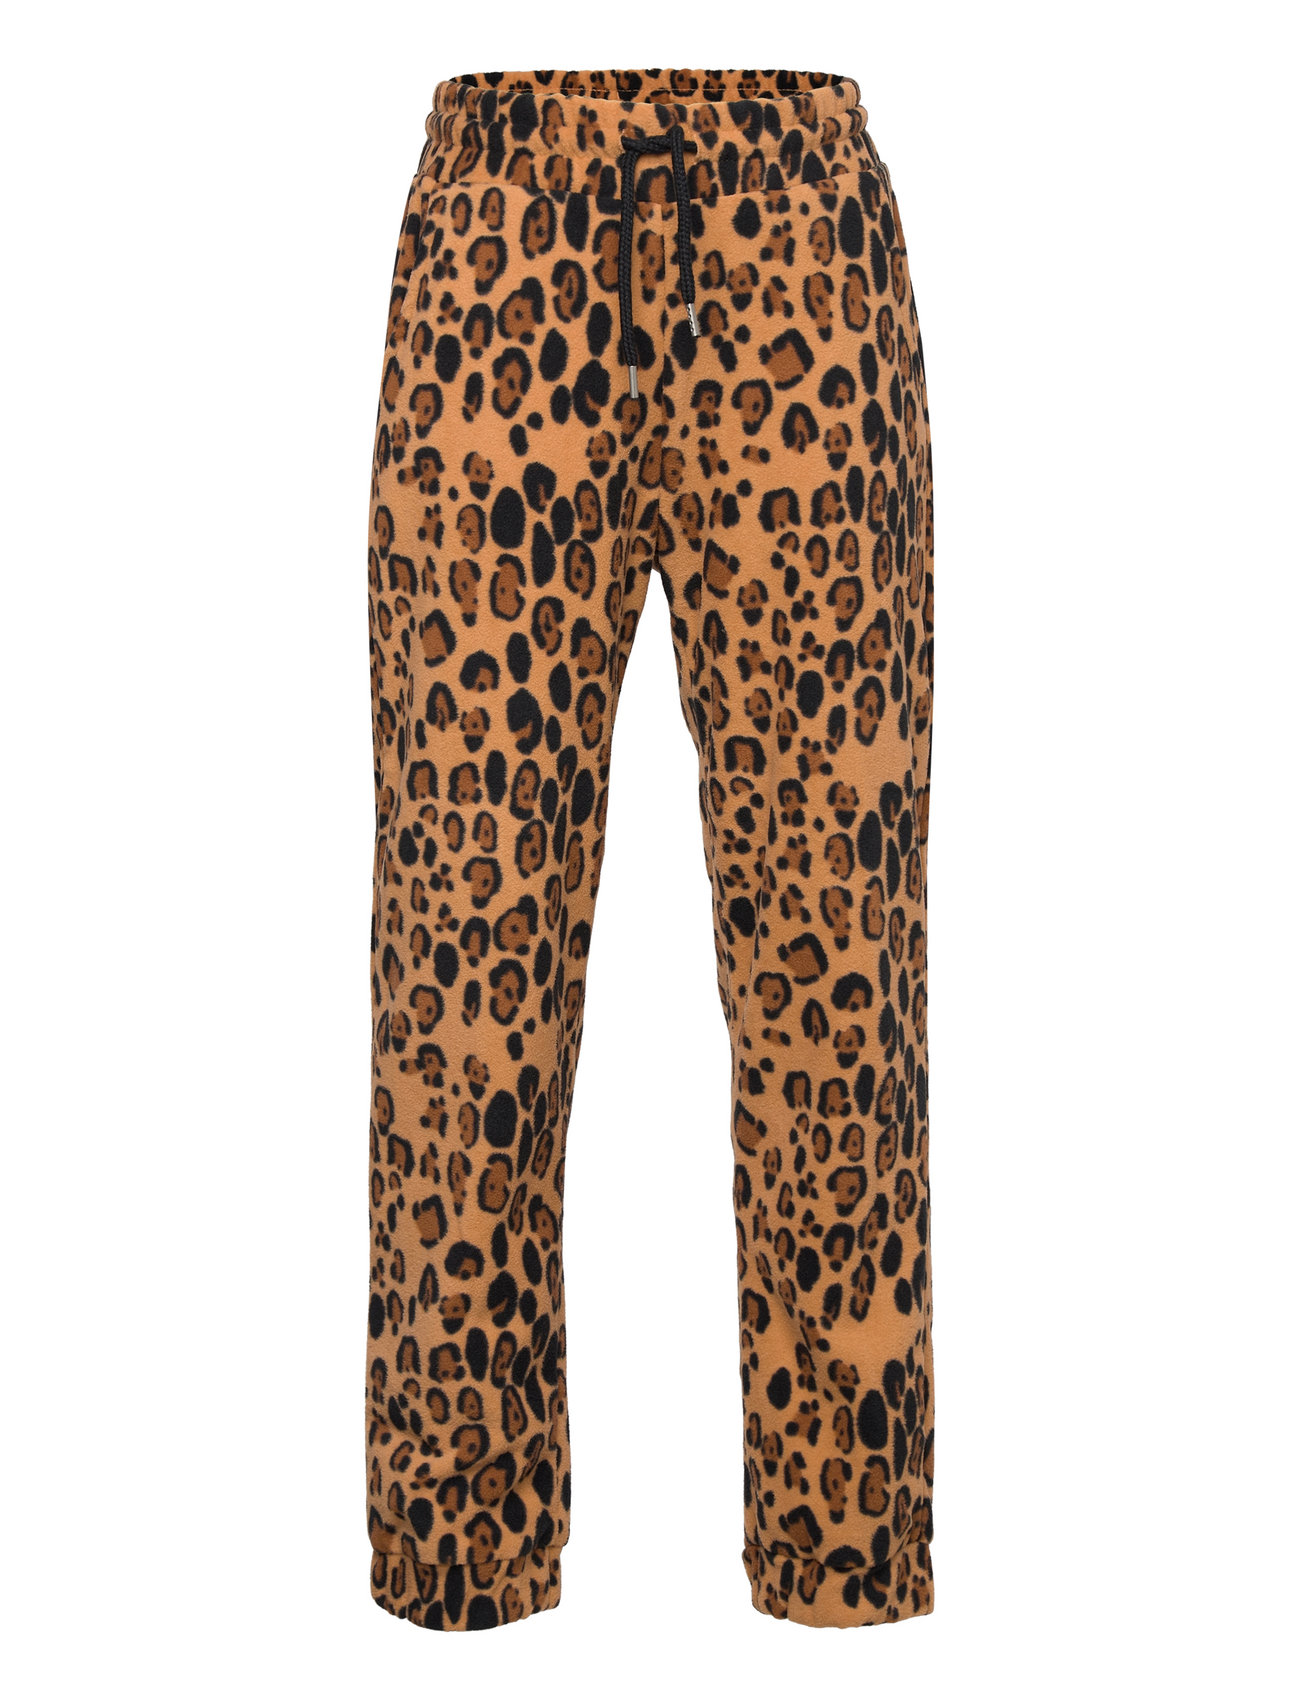 Leopard Fleece Trousers Patterned Mini Rodini